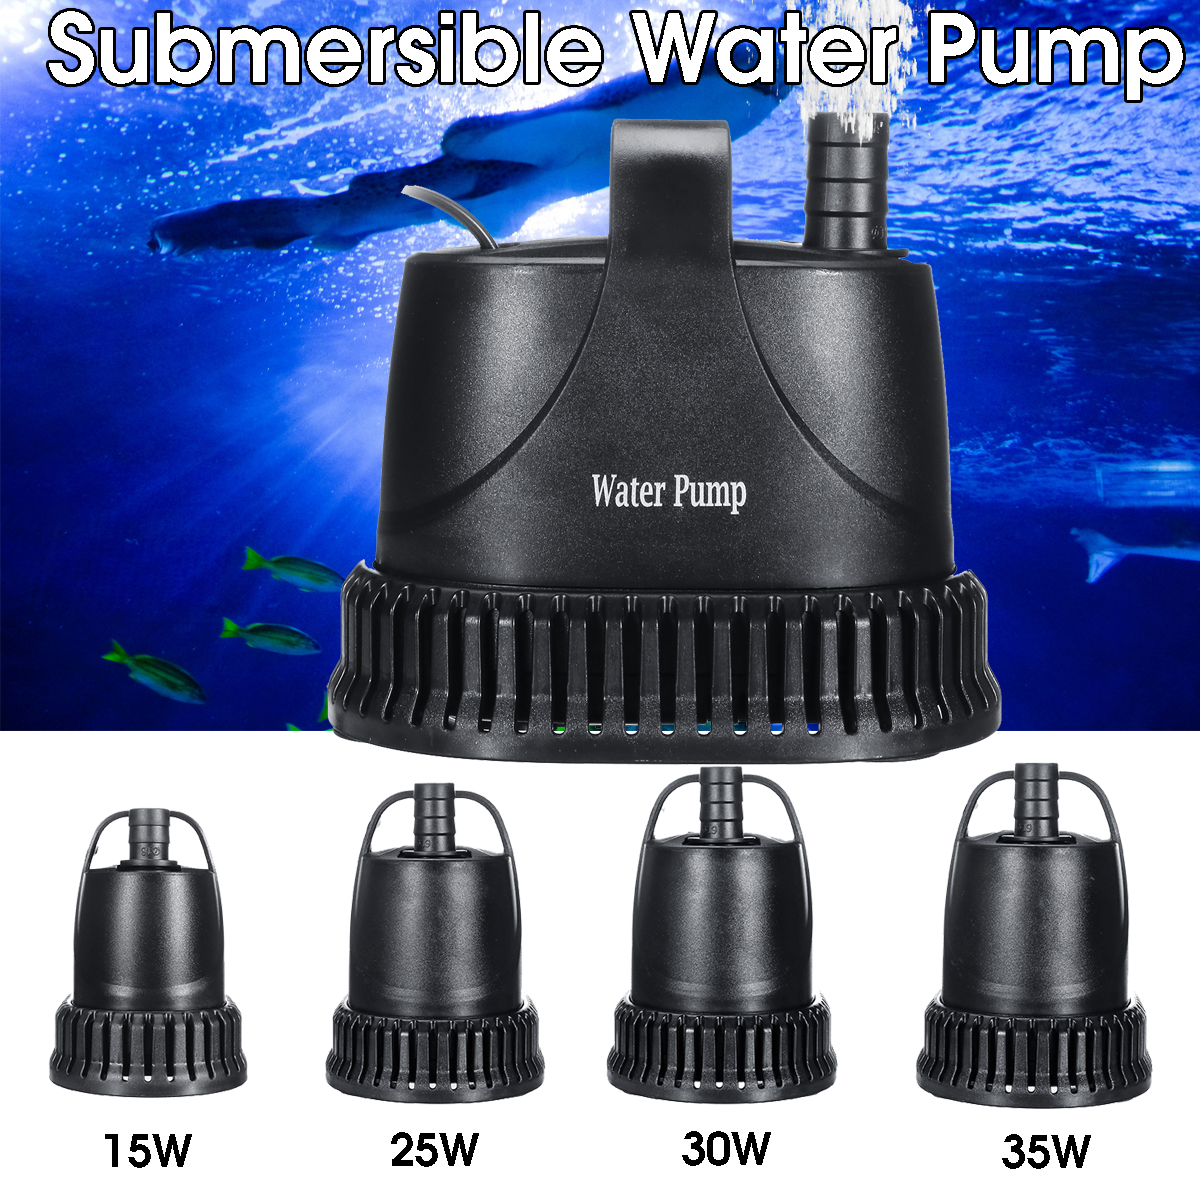 Submersible-Water-Pump-Pond-Aquarium-Fish-Tank-Fountain-Pump-Feature-220-3000-LP-1473062-1